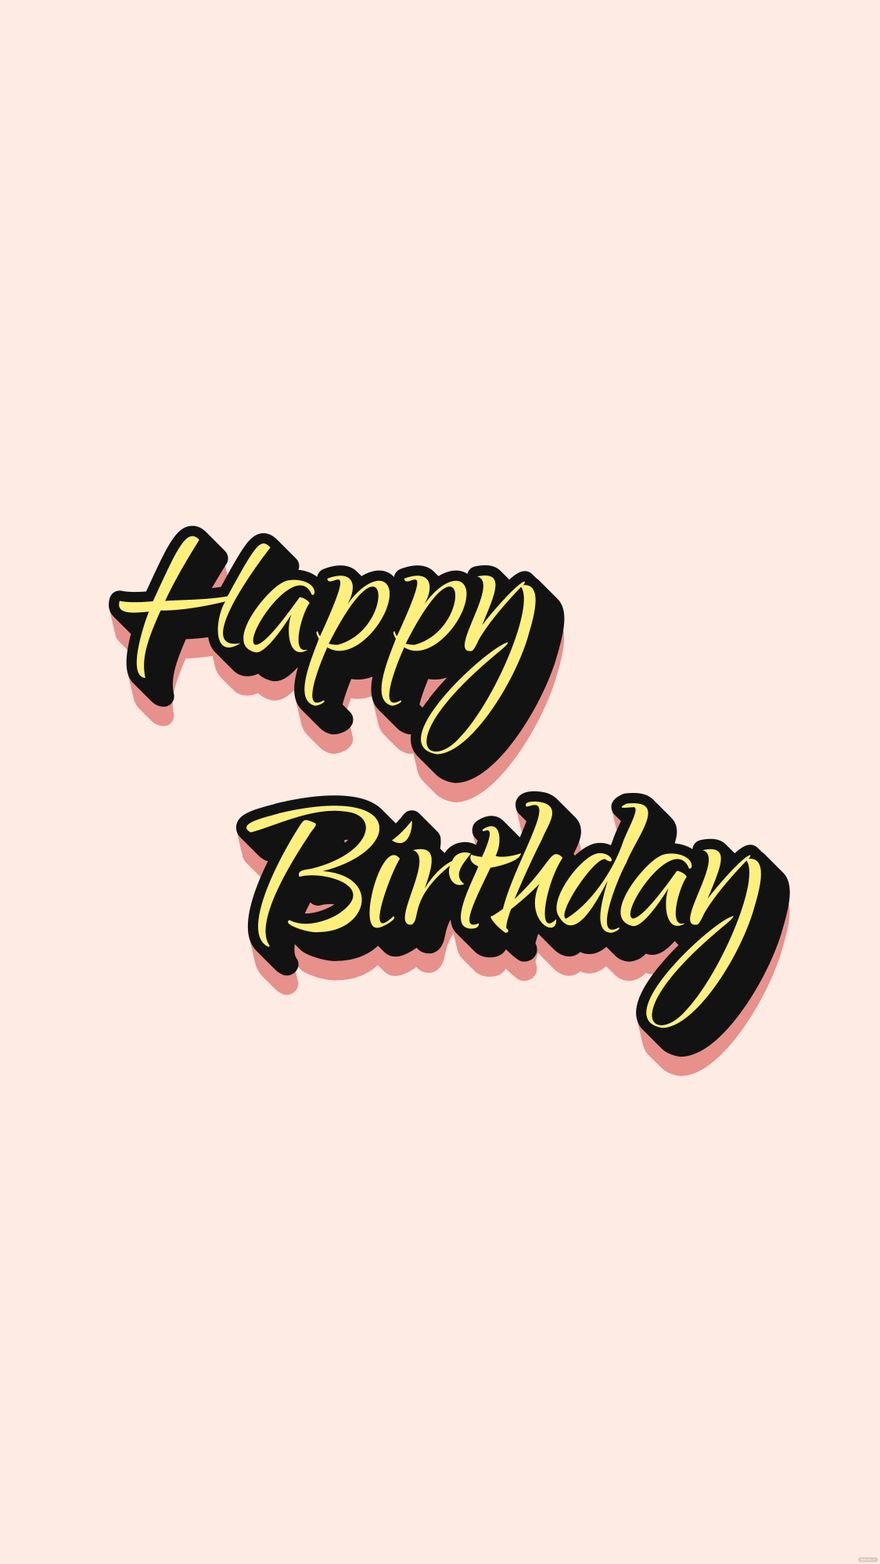 Free Happy Birthday Typography Mobile Background - EPS ...